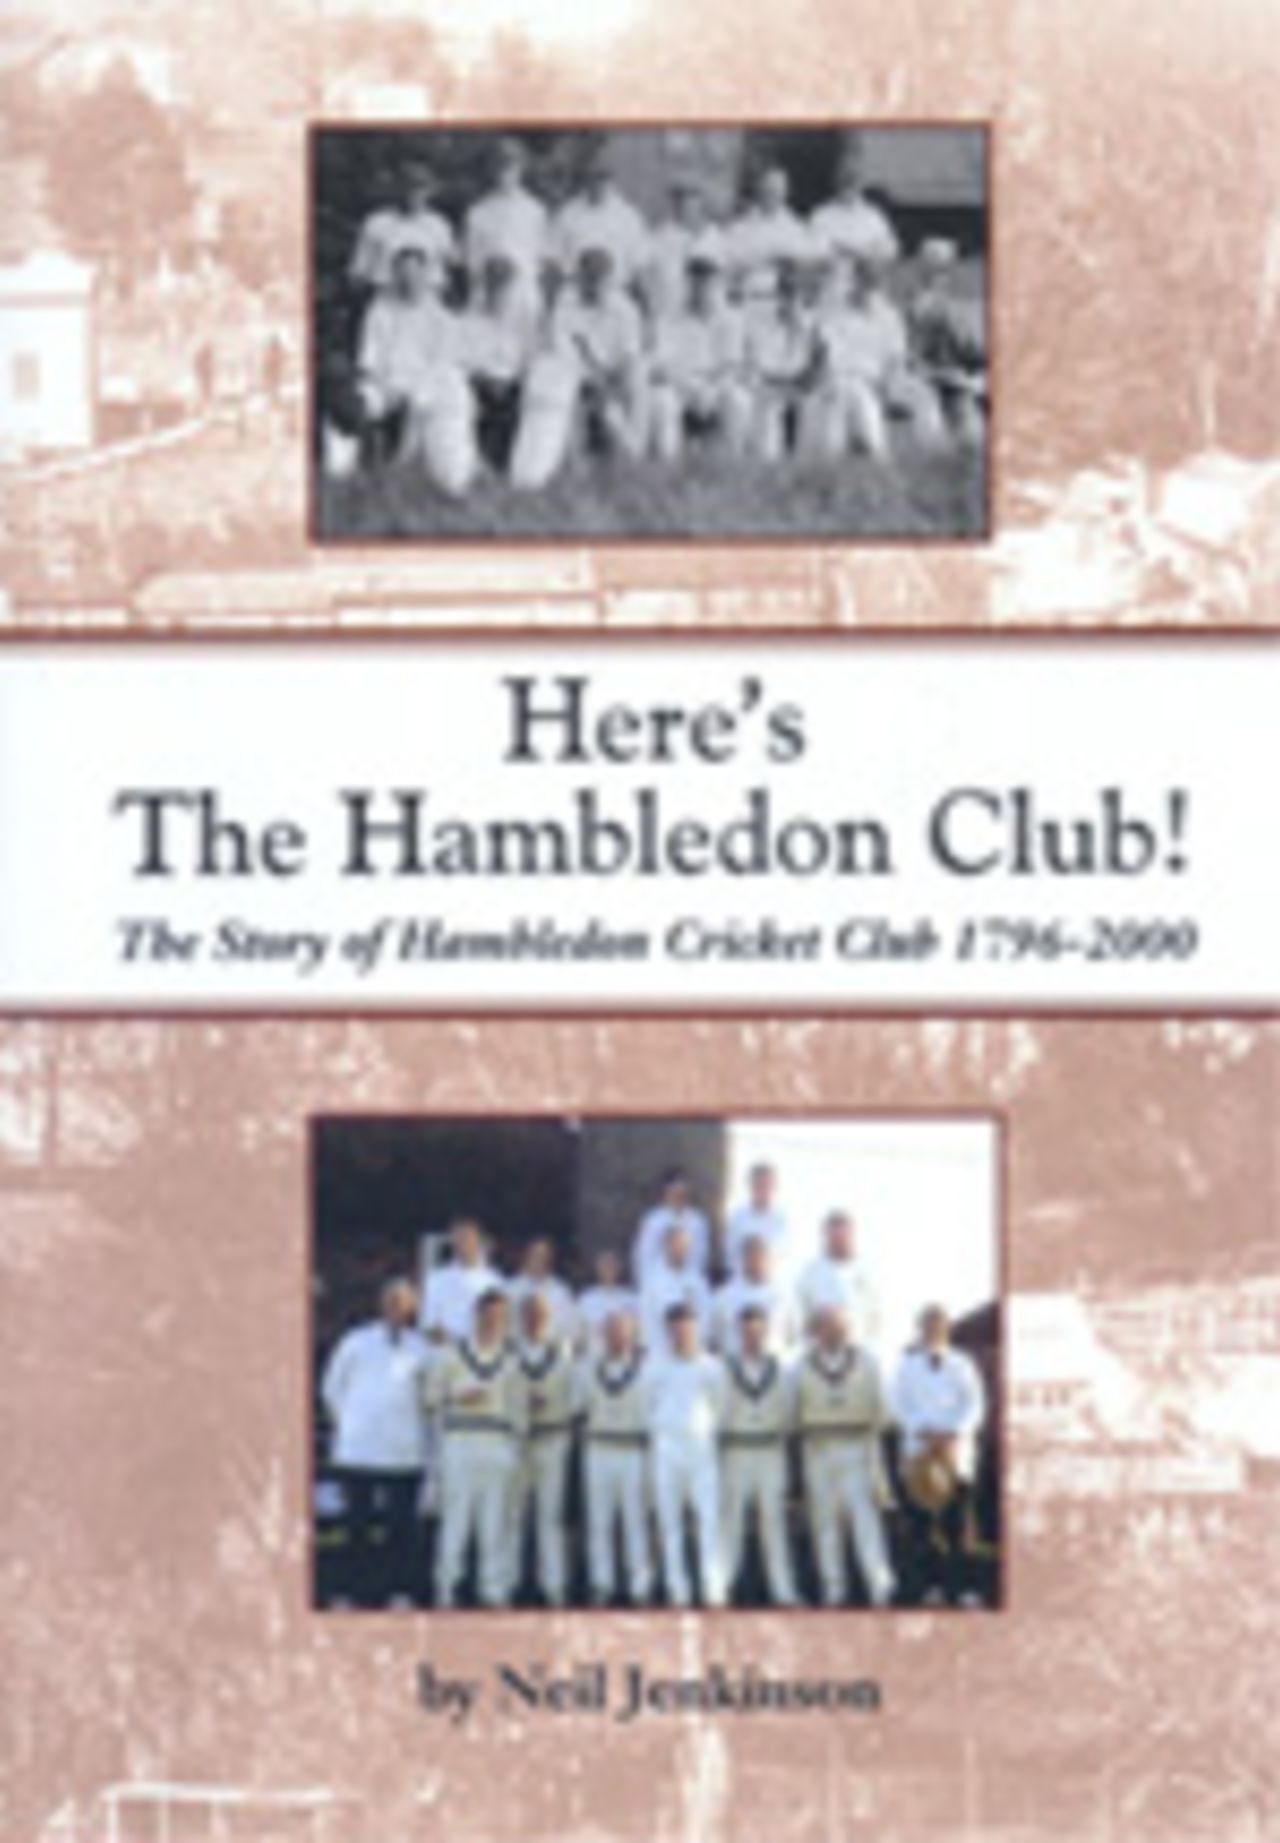 The Story of Hambledon Cricket Club 1796-2000 by Neil Jenkinson